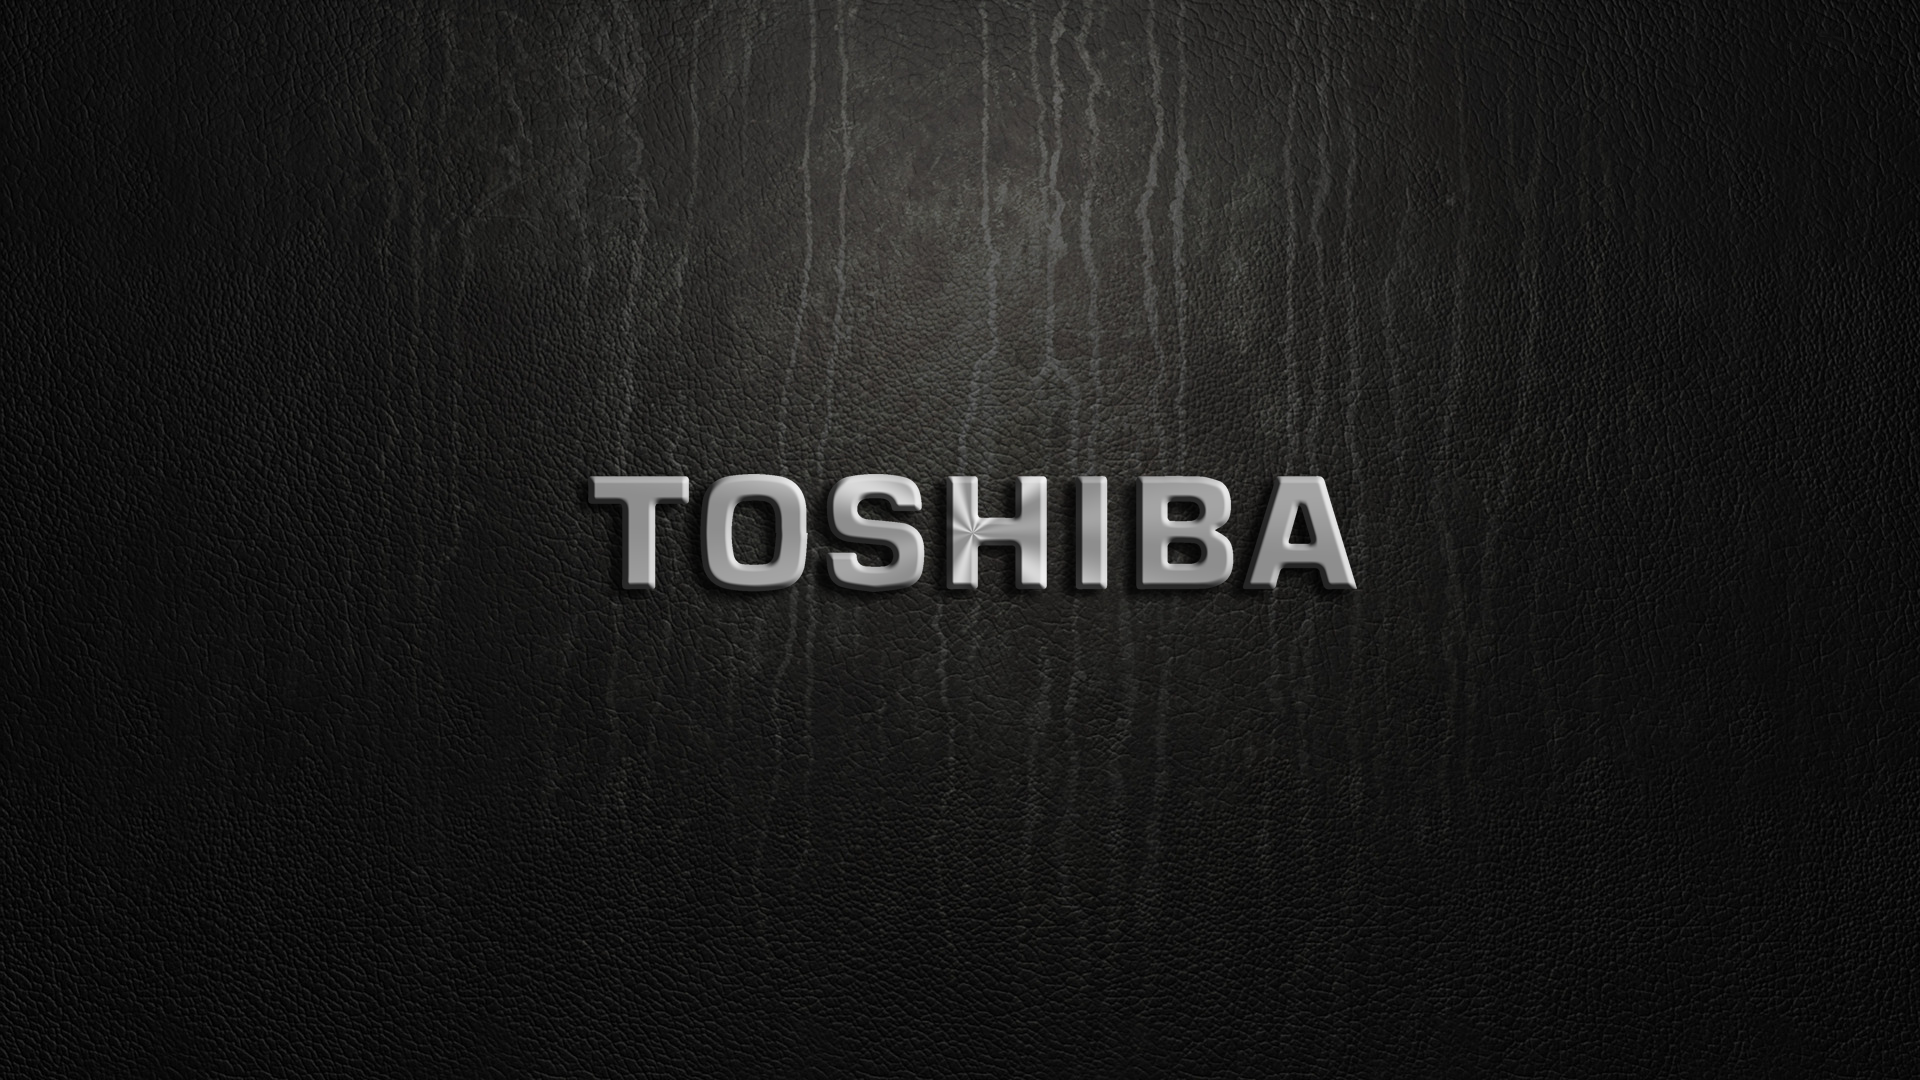 Toshiba Wallpapers, Achtergronden | 1920x1080 | ID:588100